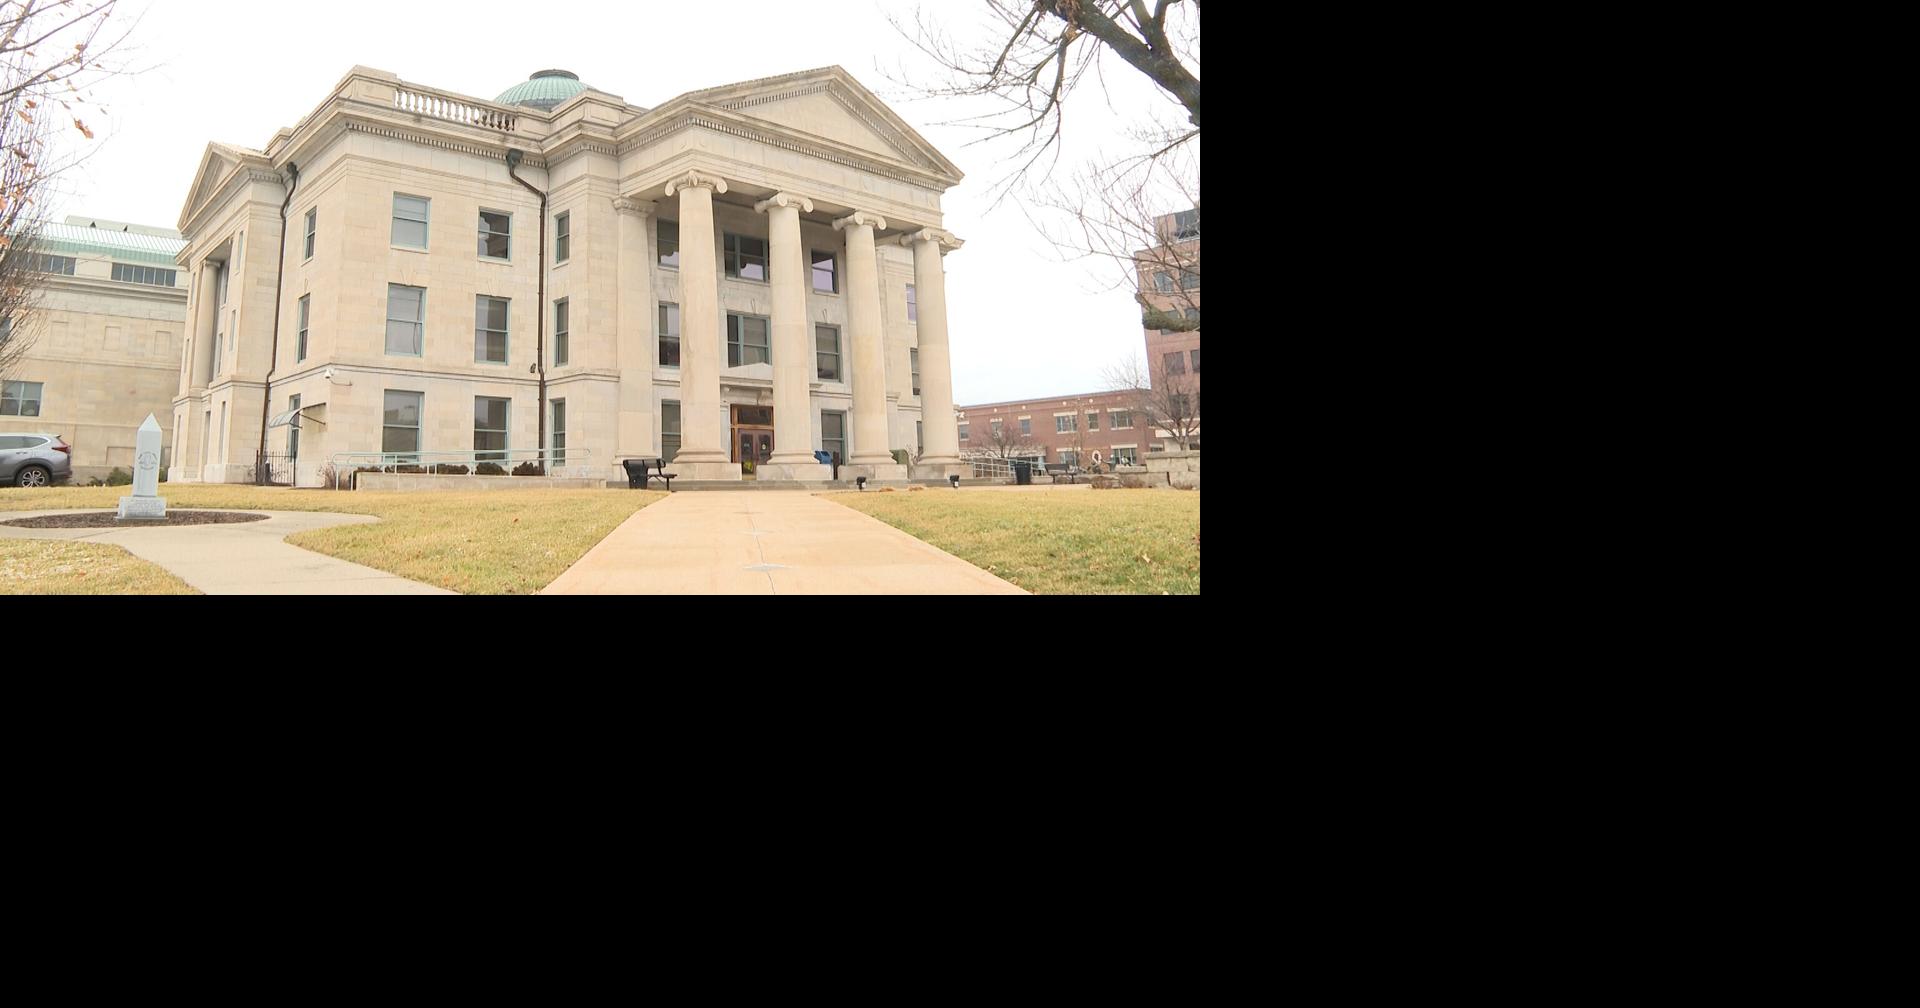 Missouri Senate bill aims to protect judicial information State News